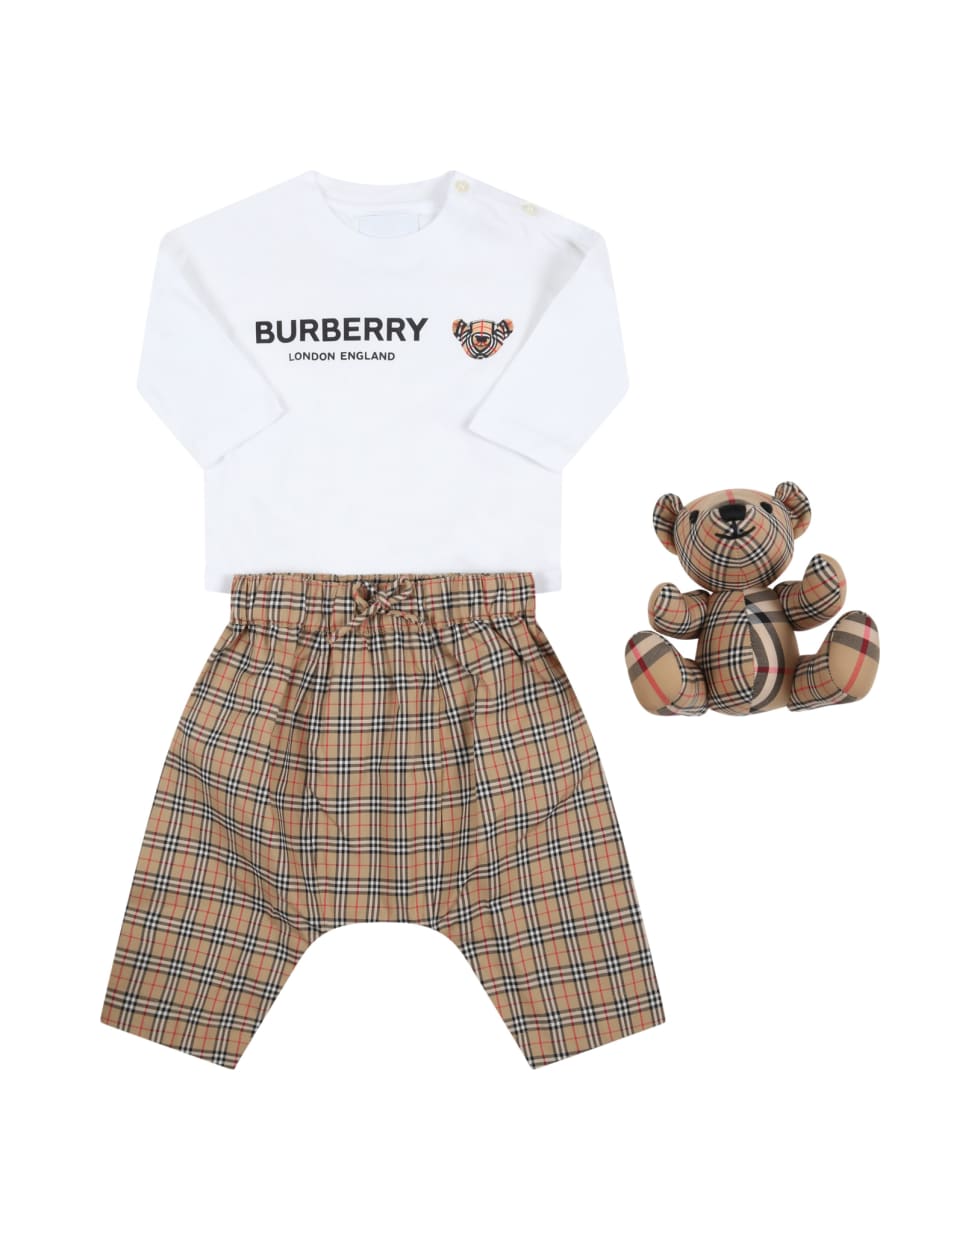 Burberry Multicolor Set For Baby Boy - Beige